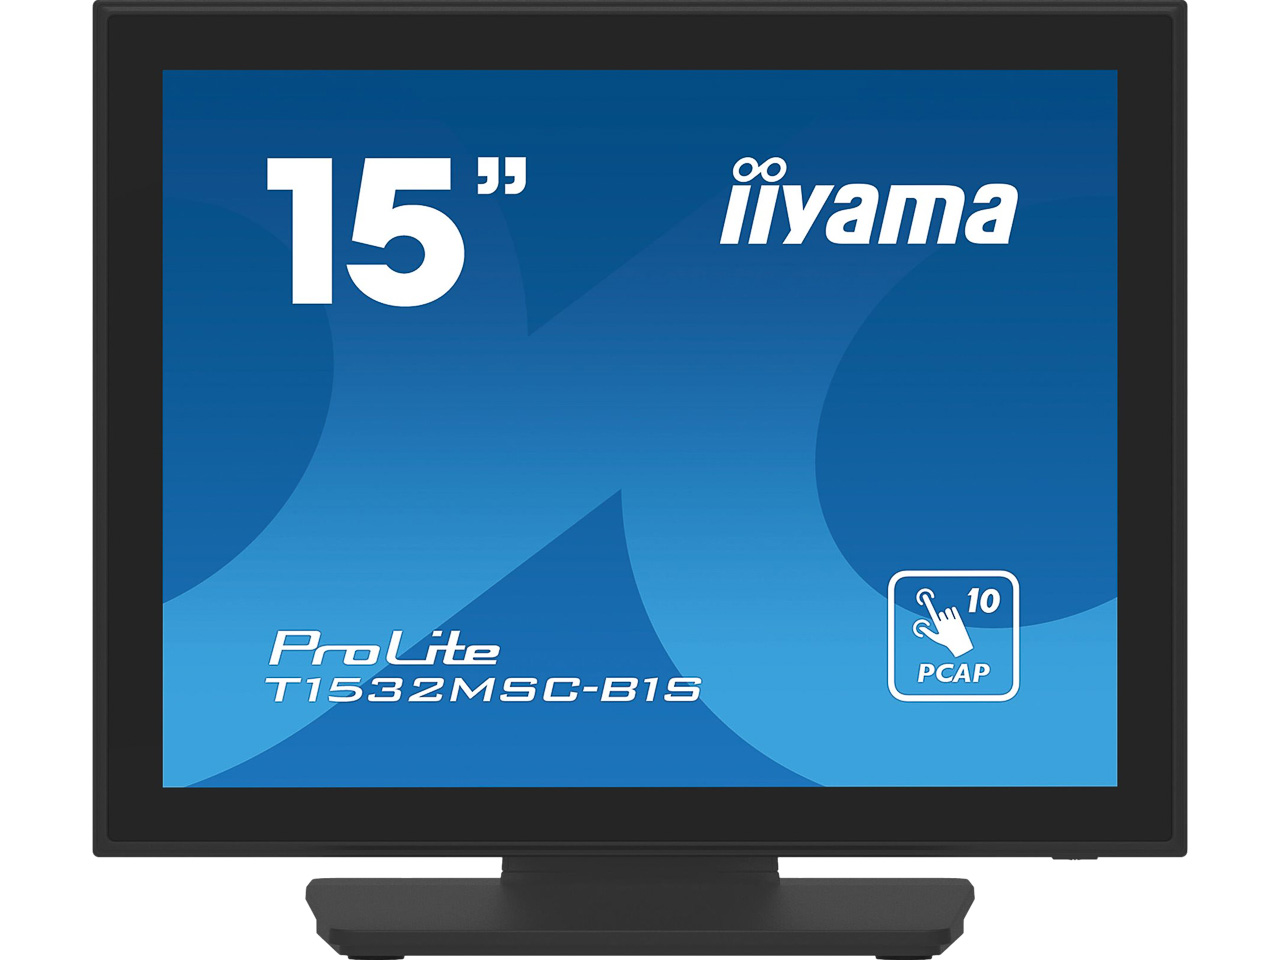 T1532MSC-B1S IIYAMA Prolite Monitor 15" (38,1cm) 1024x768dpi LED E 1